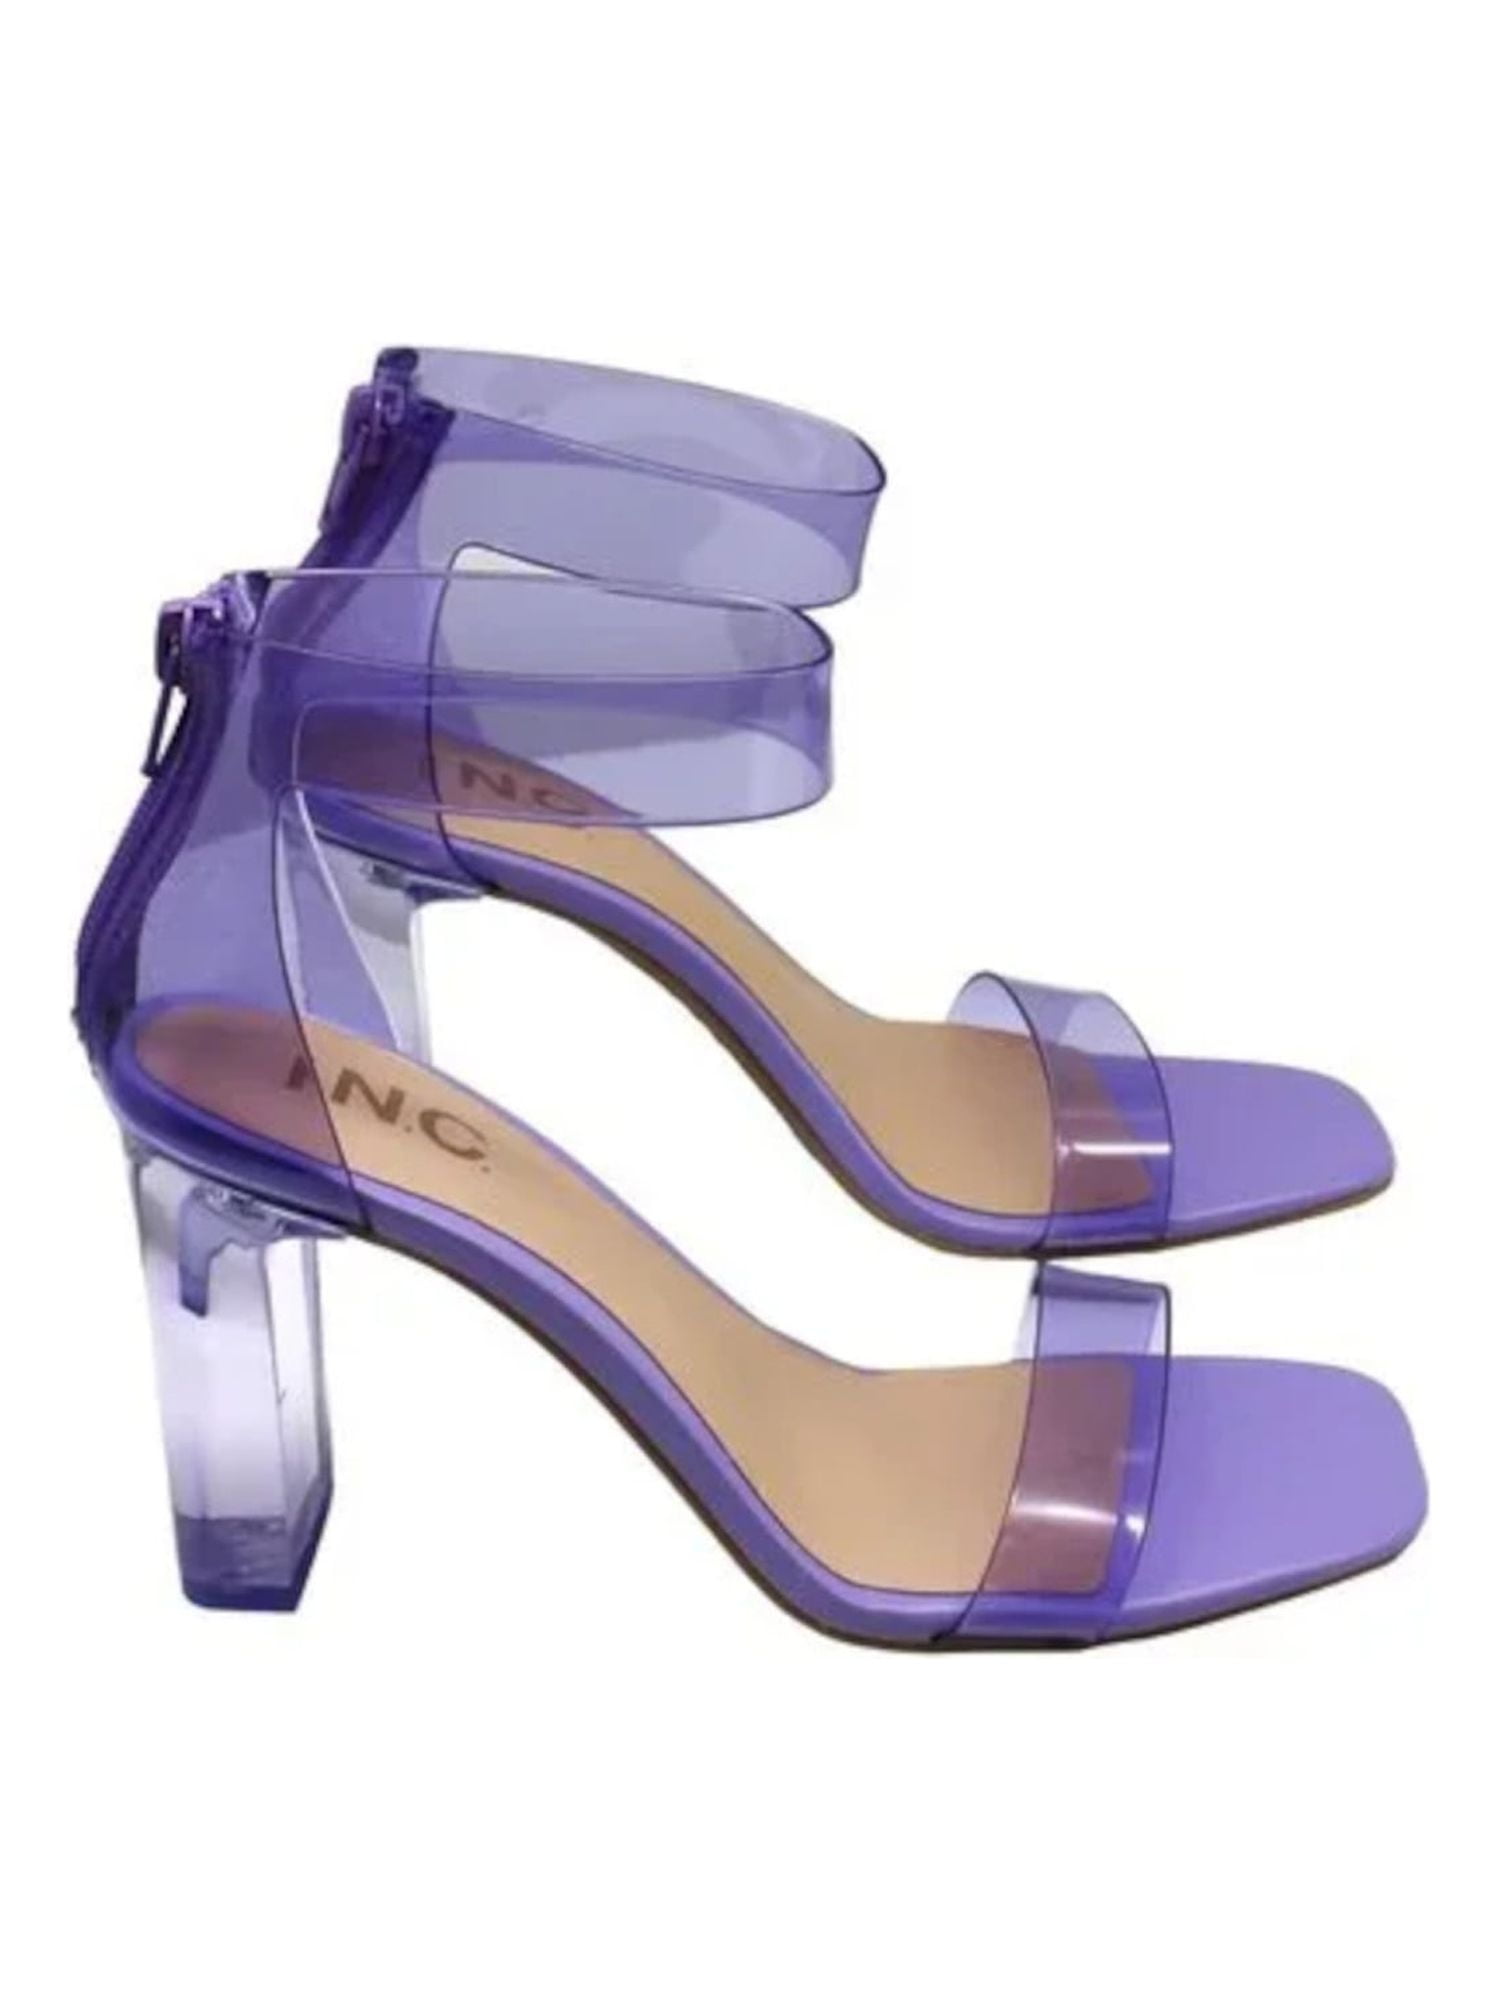 Silver Women Sandals With Heels | WalkTrendy at Rs 385 | Mumbai| ID:  25570372930